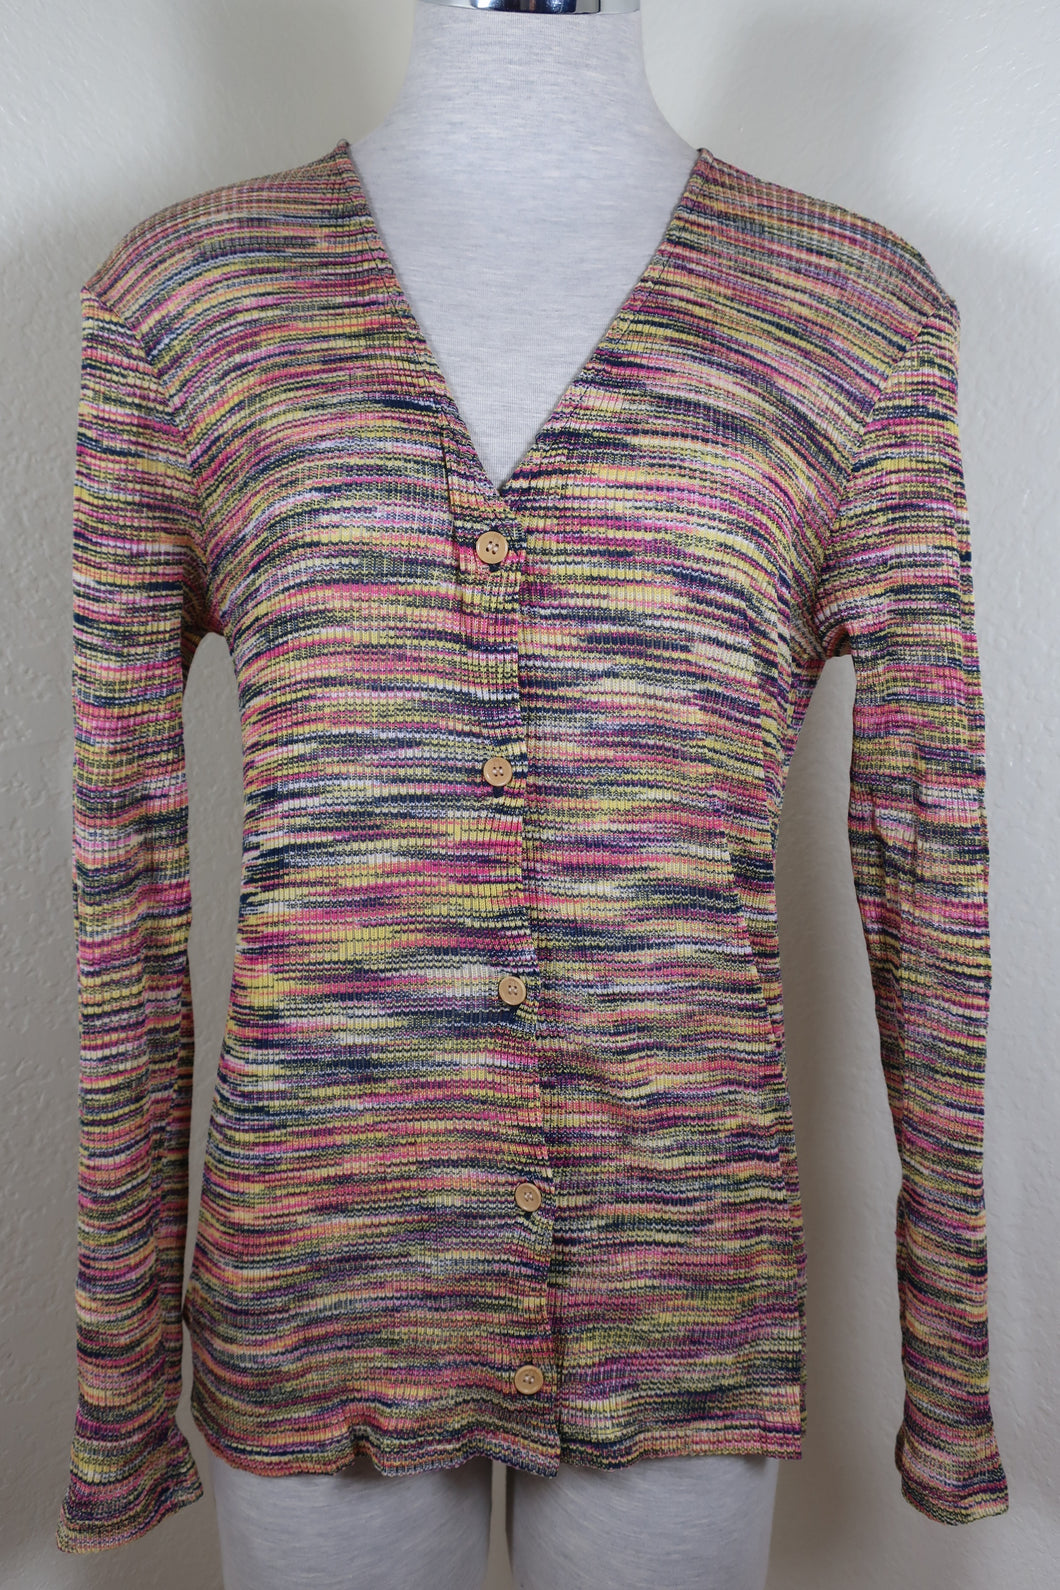 Vintage MISSONI Earth Tone Knitted Cotton Cardigan Sweater Jacket Small - Medium 6 7 8